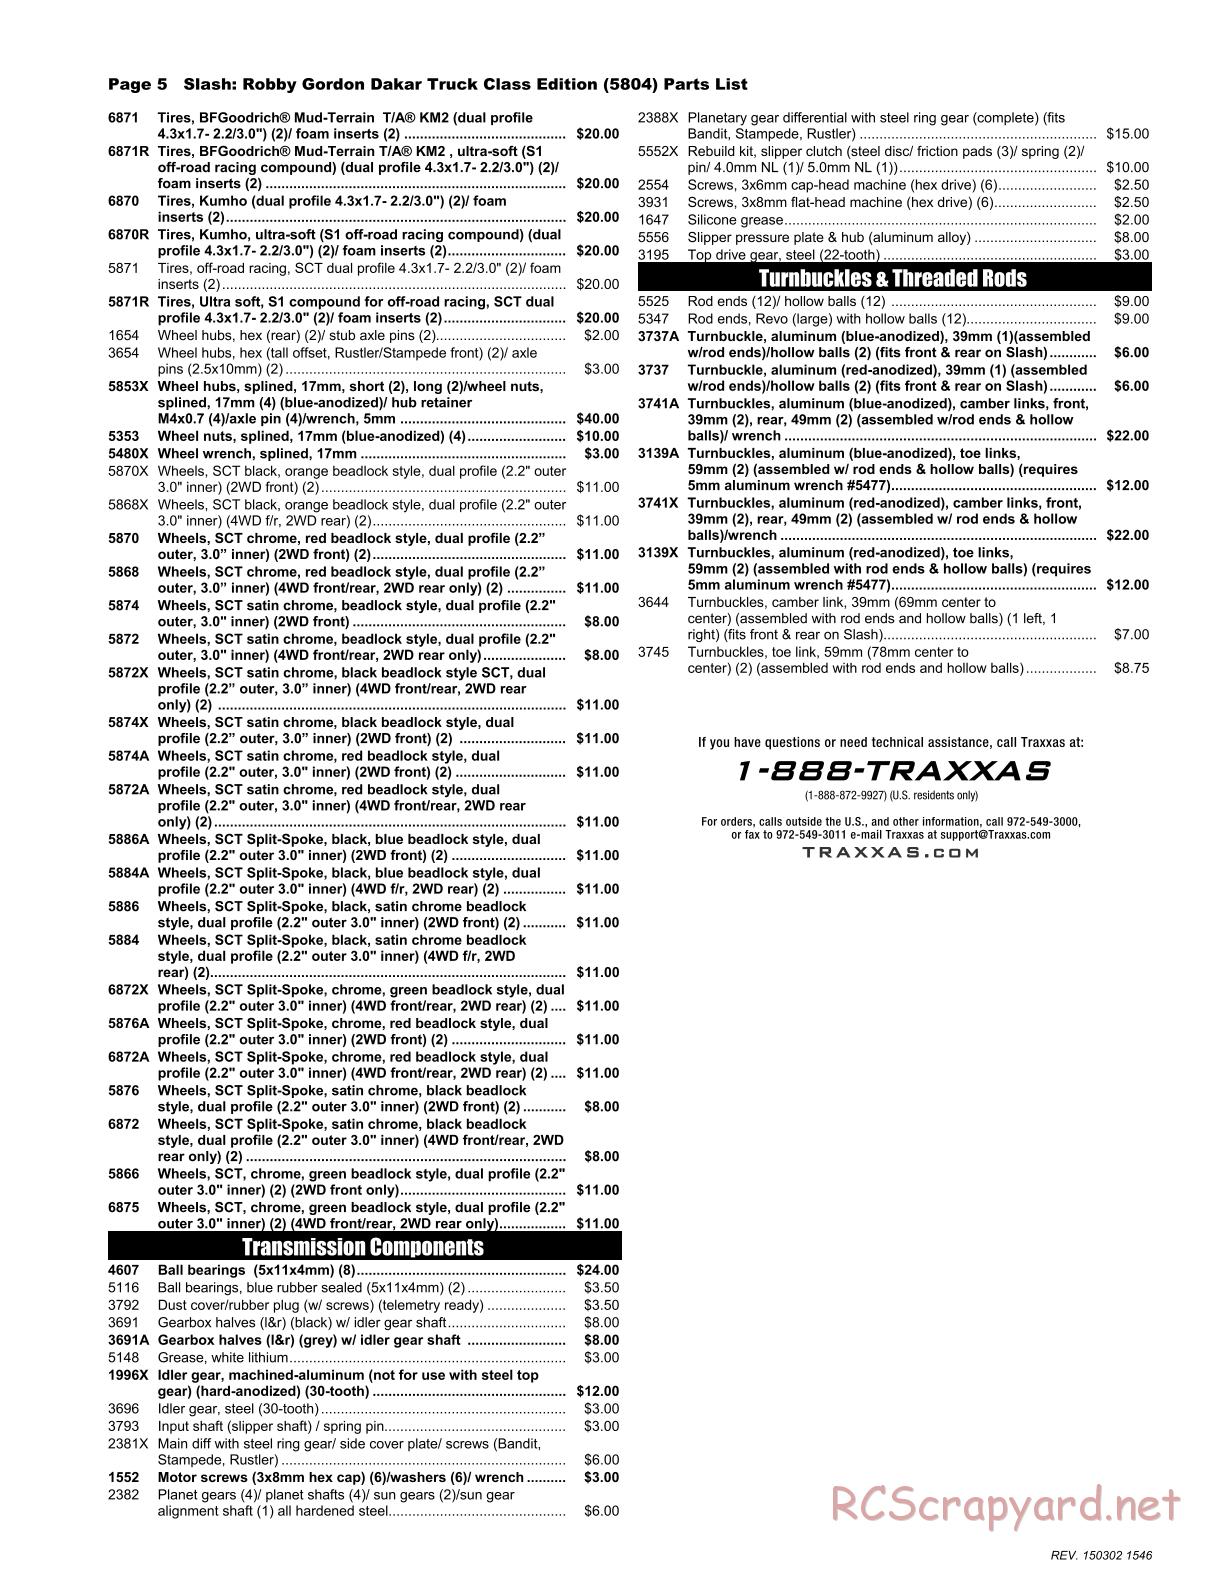 Traxxas - Slash 2WD Robby Gordon Dakar Ed (2012) - Parts List - Page 5